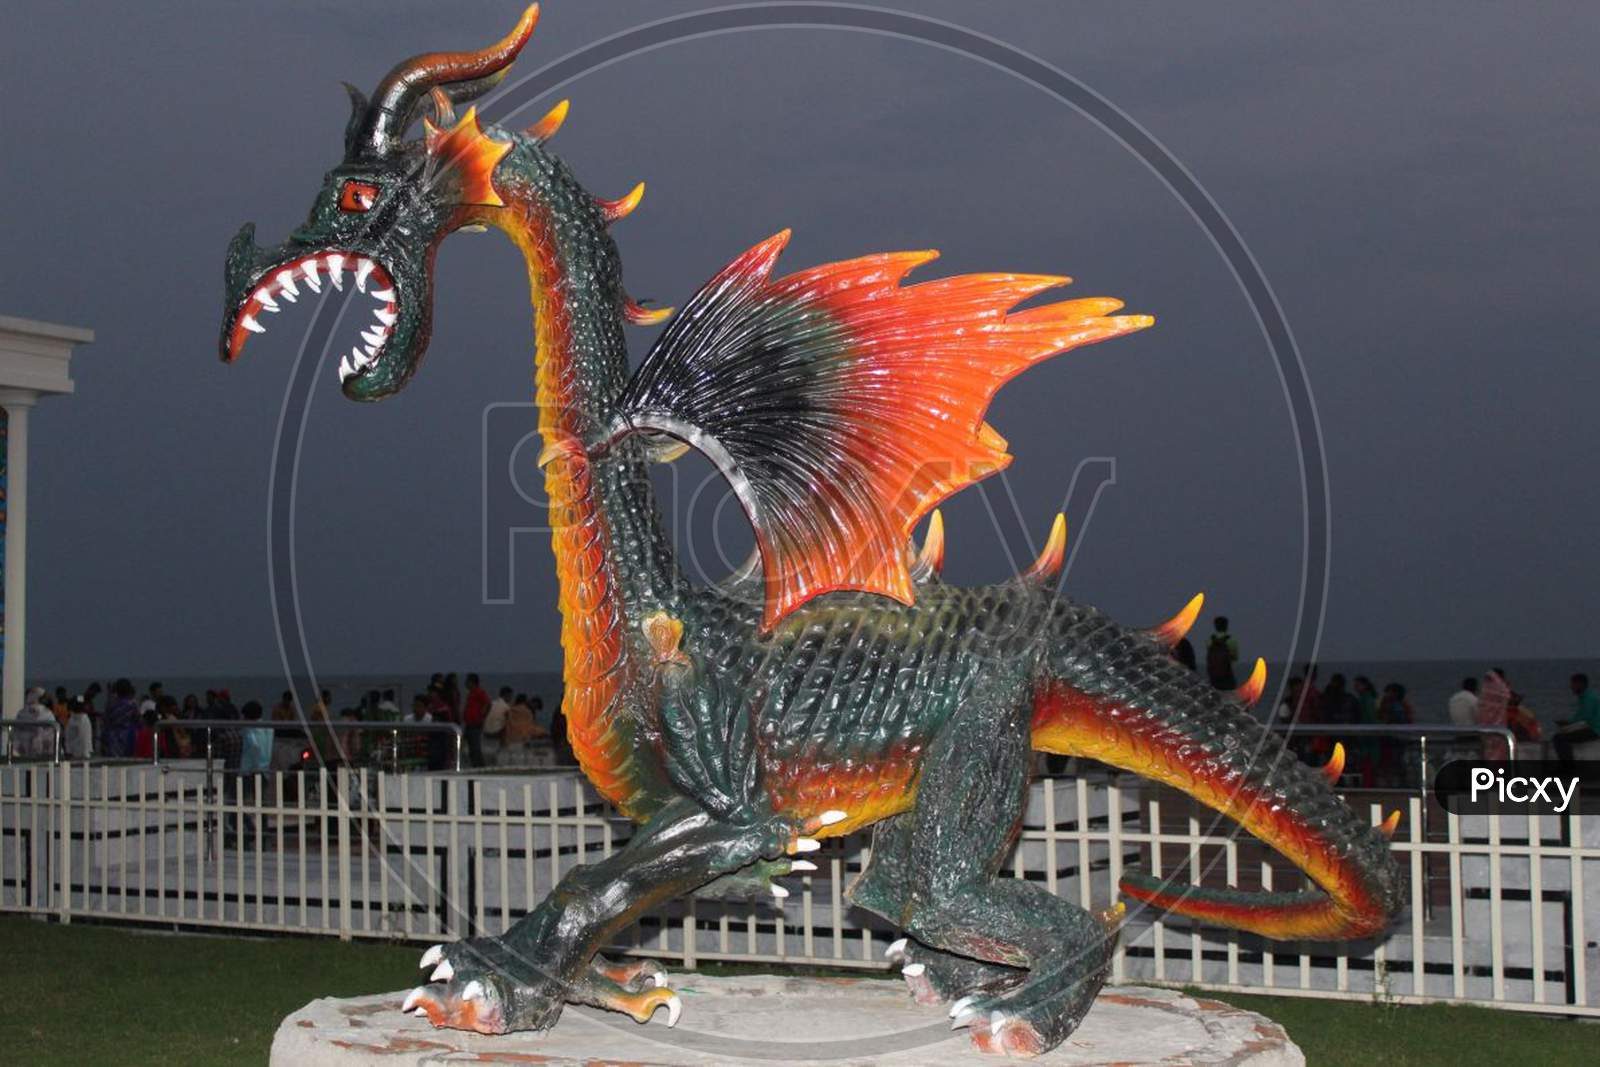 A beautiful dragon statue